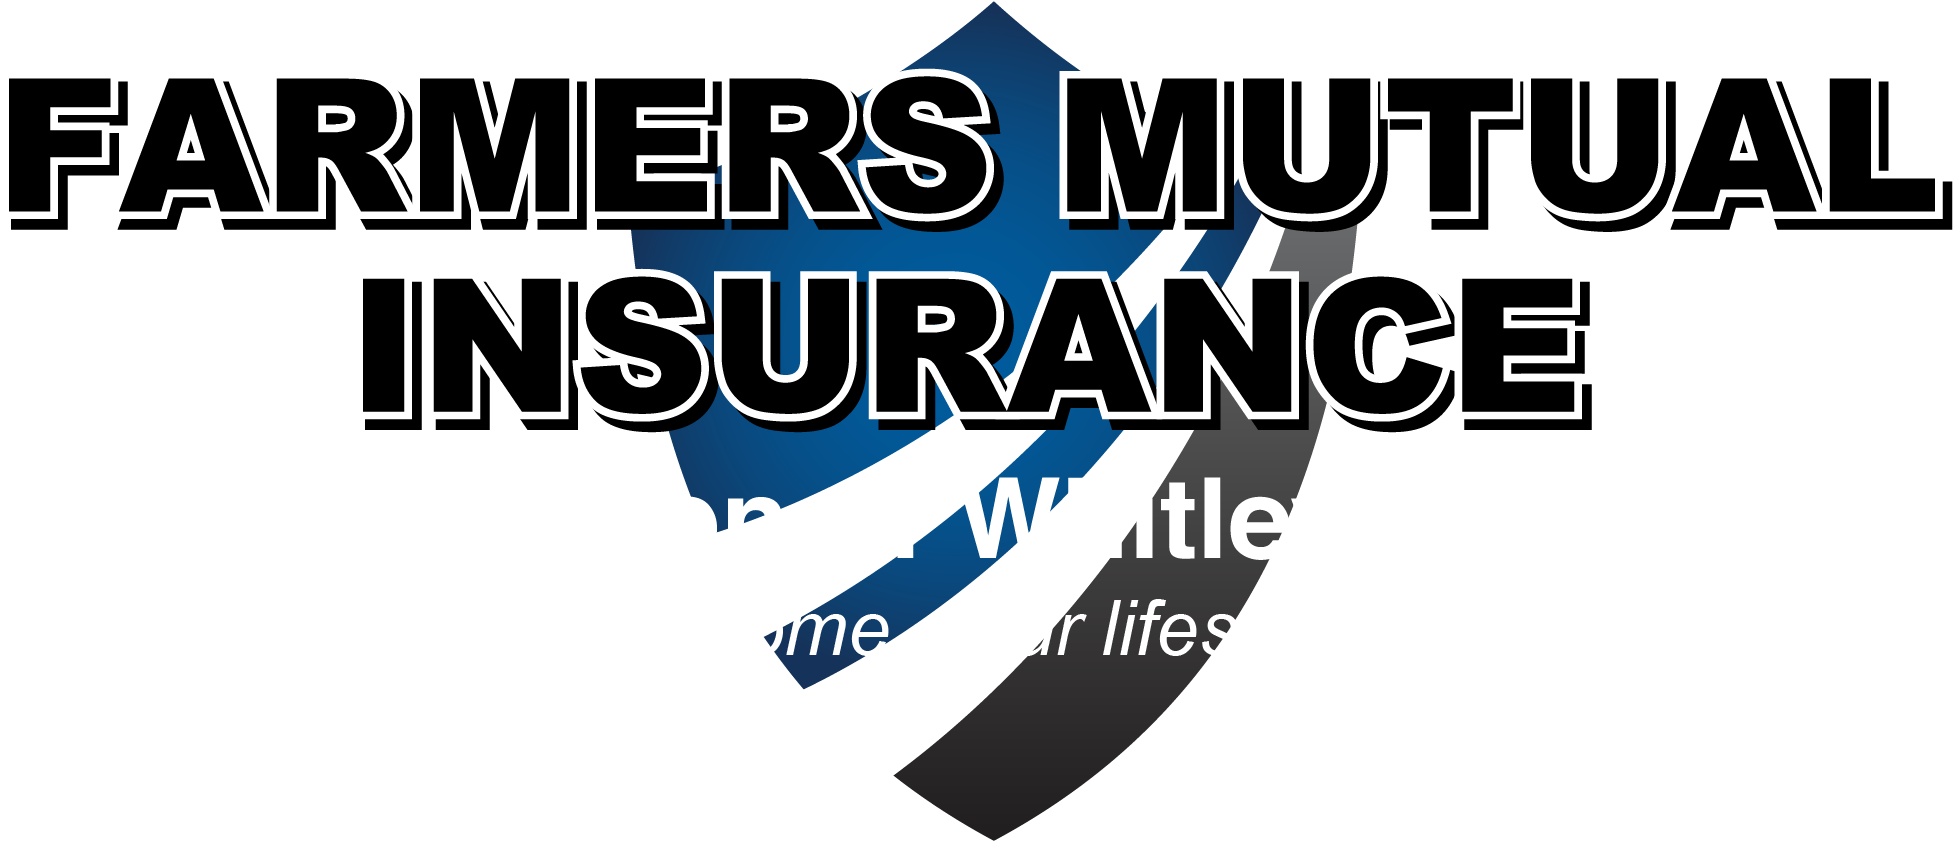 Farmers Mutual Insurance - Insurance (2068x959), Png Download